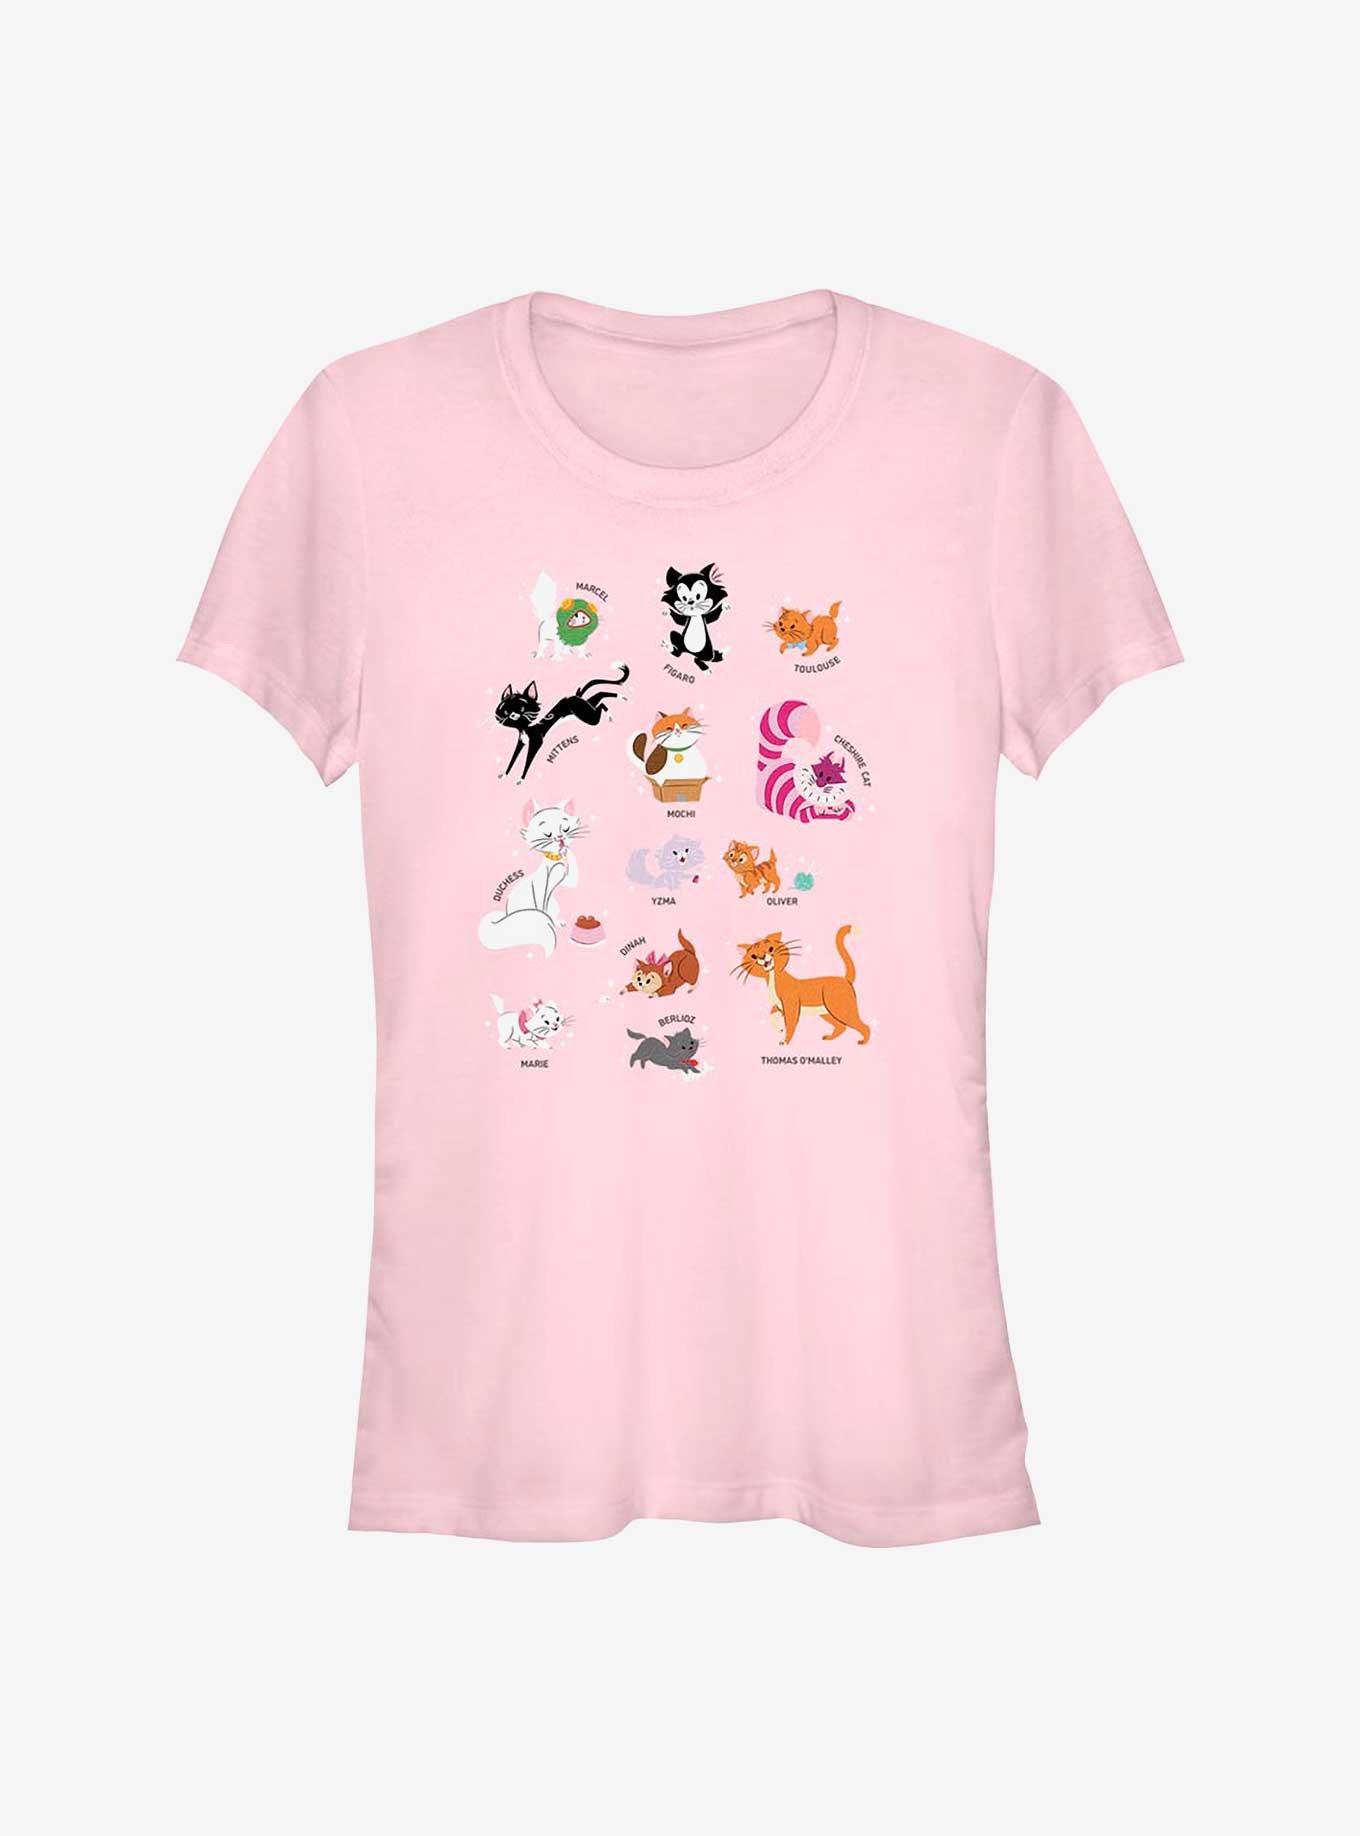 Disney Channel Cats of Disney Girls T-Shirt, LIGHT PINK, hi-res